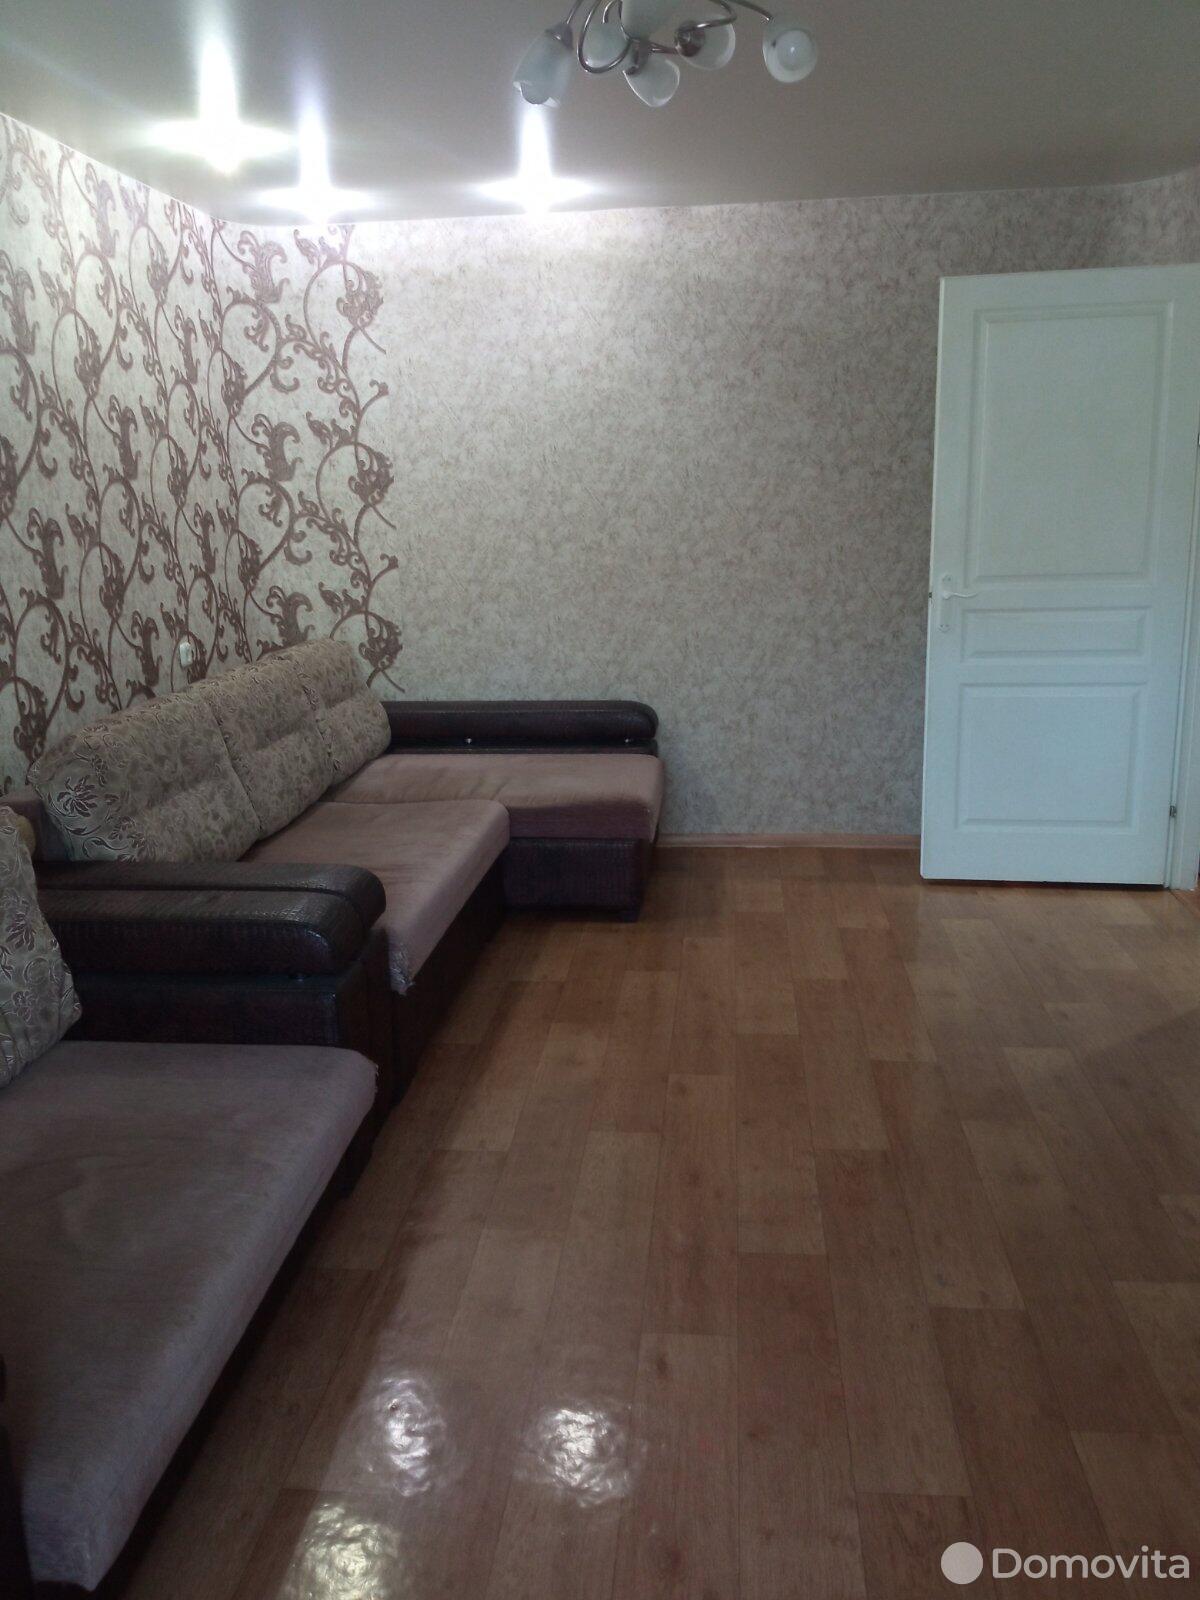 квартира, Минск, ул. Чичурина, д. 6, стоимость продажи 191 656 р.